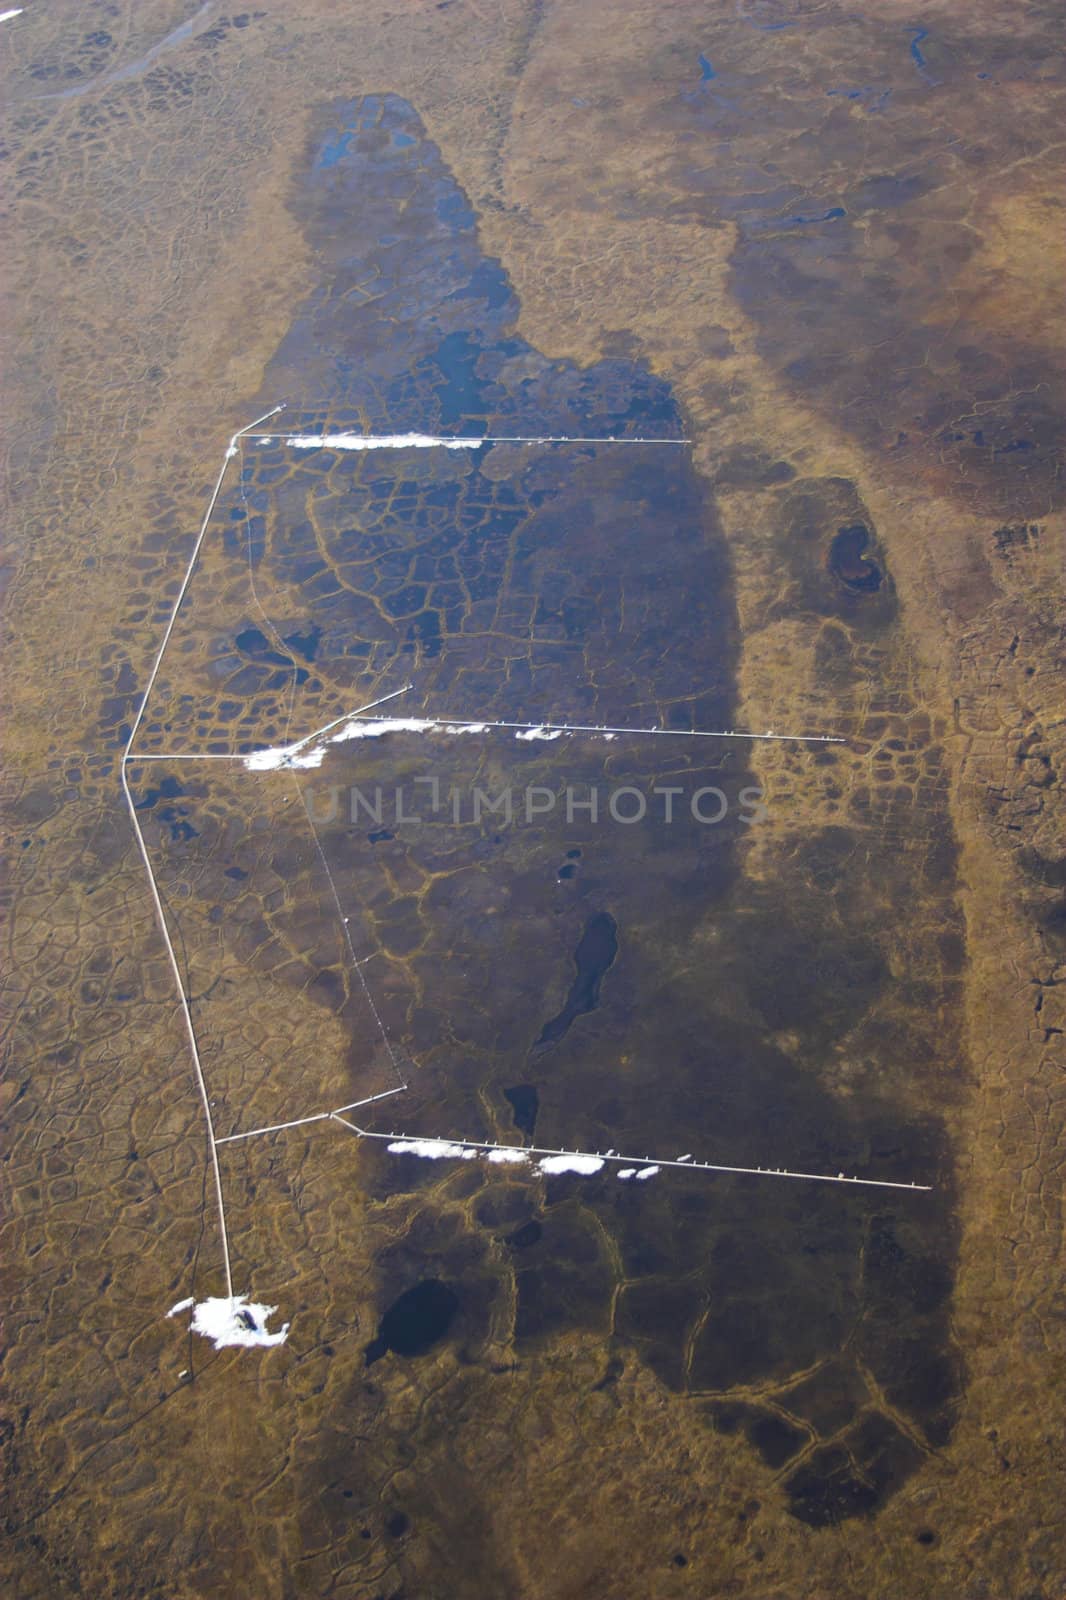 Aerial view of tundra near Arctic Ocean